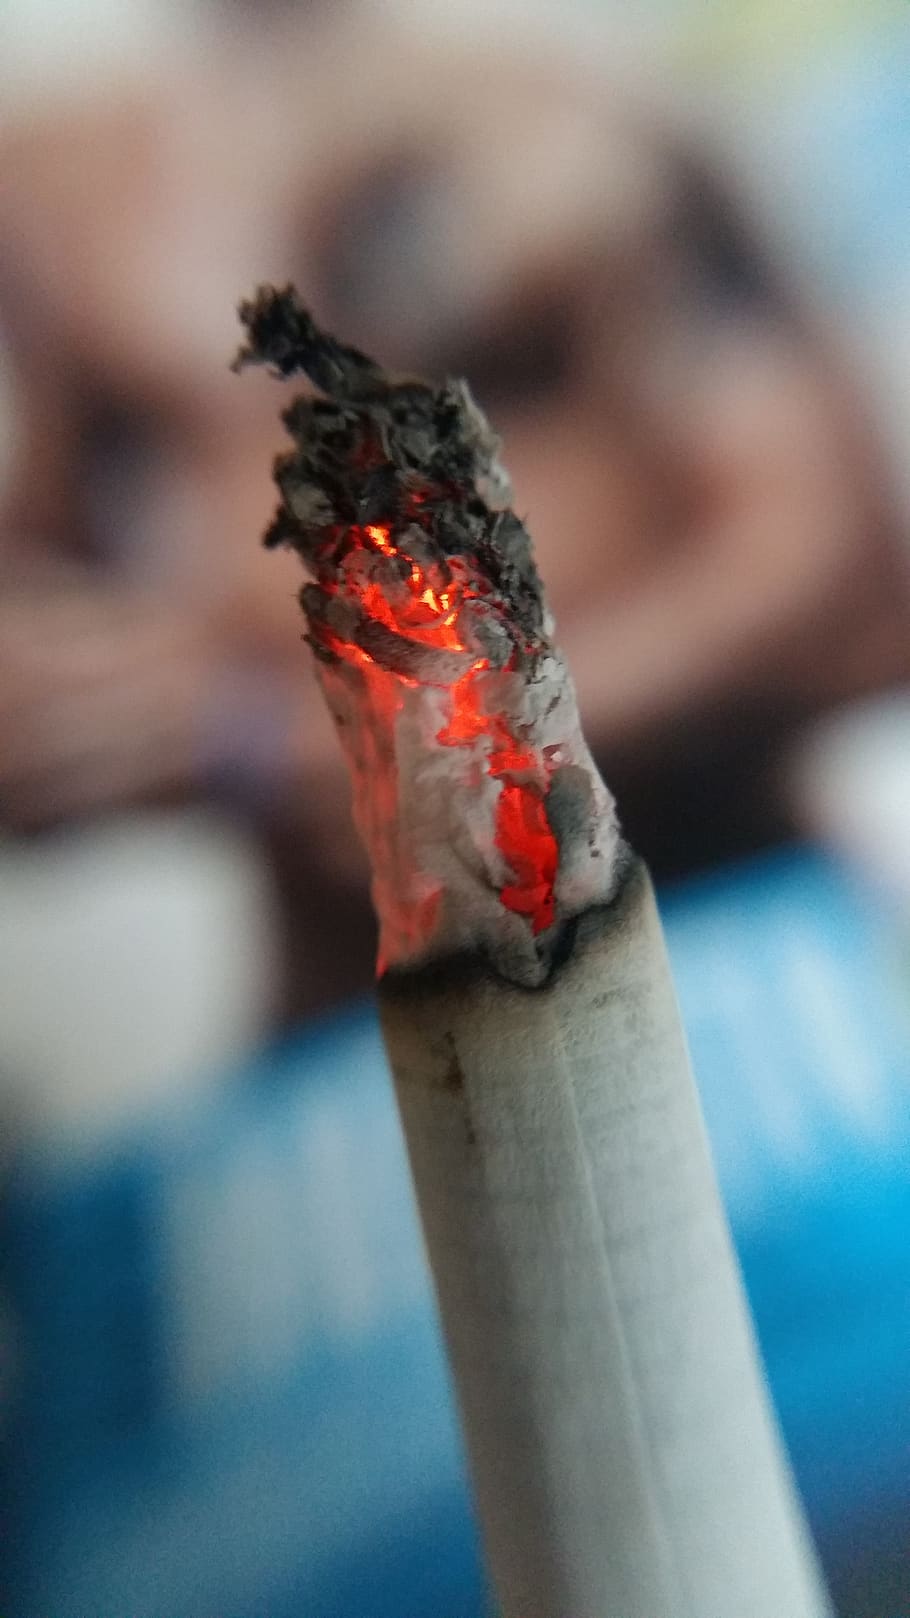 cigarette, smoke, cancer, addiction, fire, smoking, red, white, gray, burn